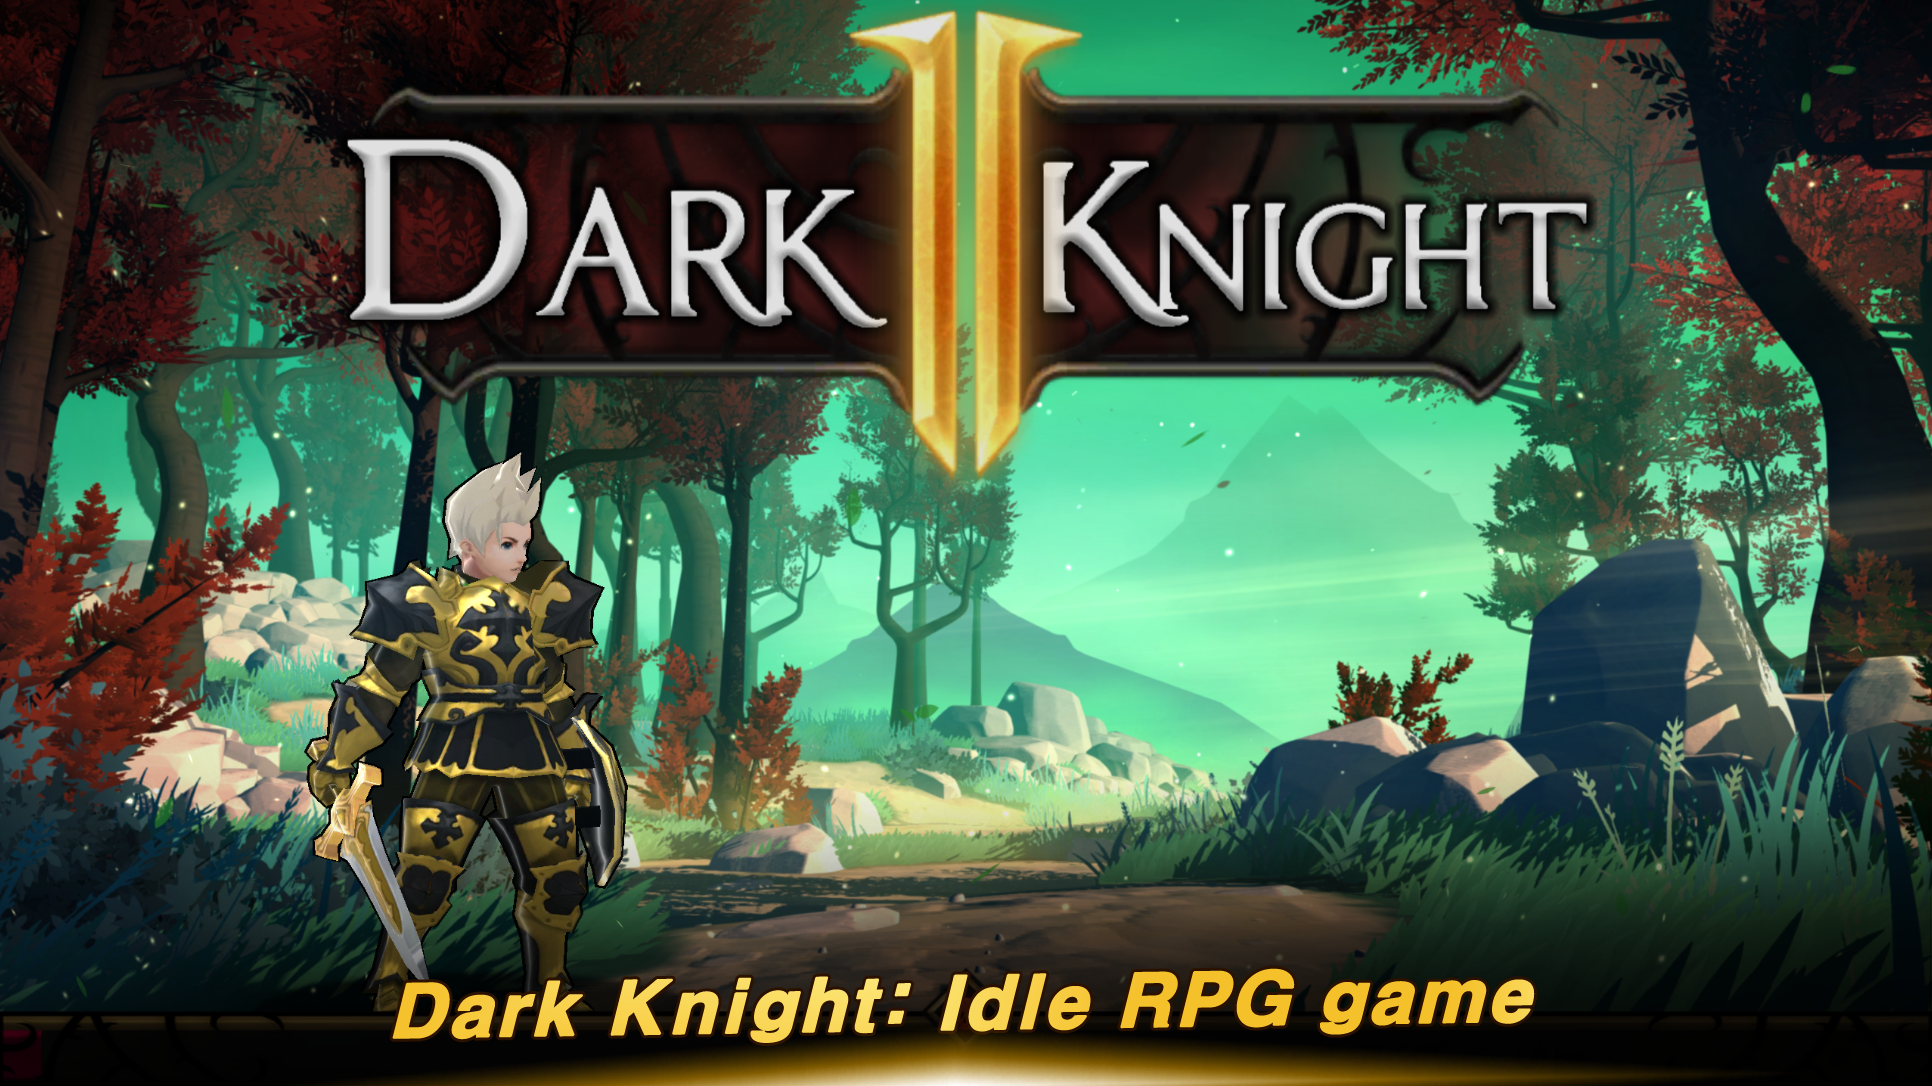 Screenshot 1 of Темный рыцарь: Idle RPG игра 0.1122